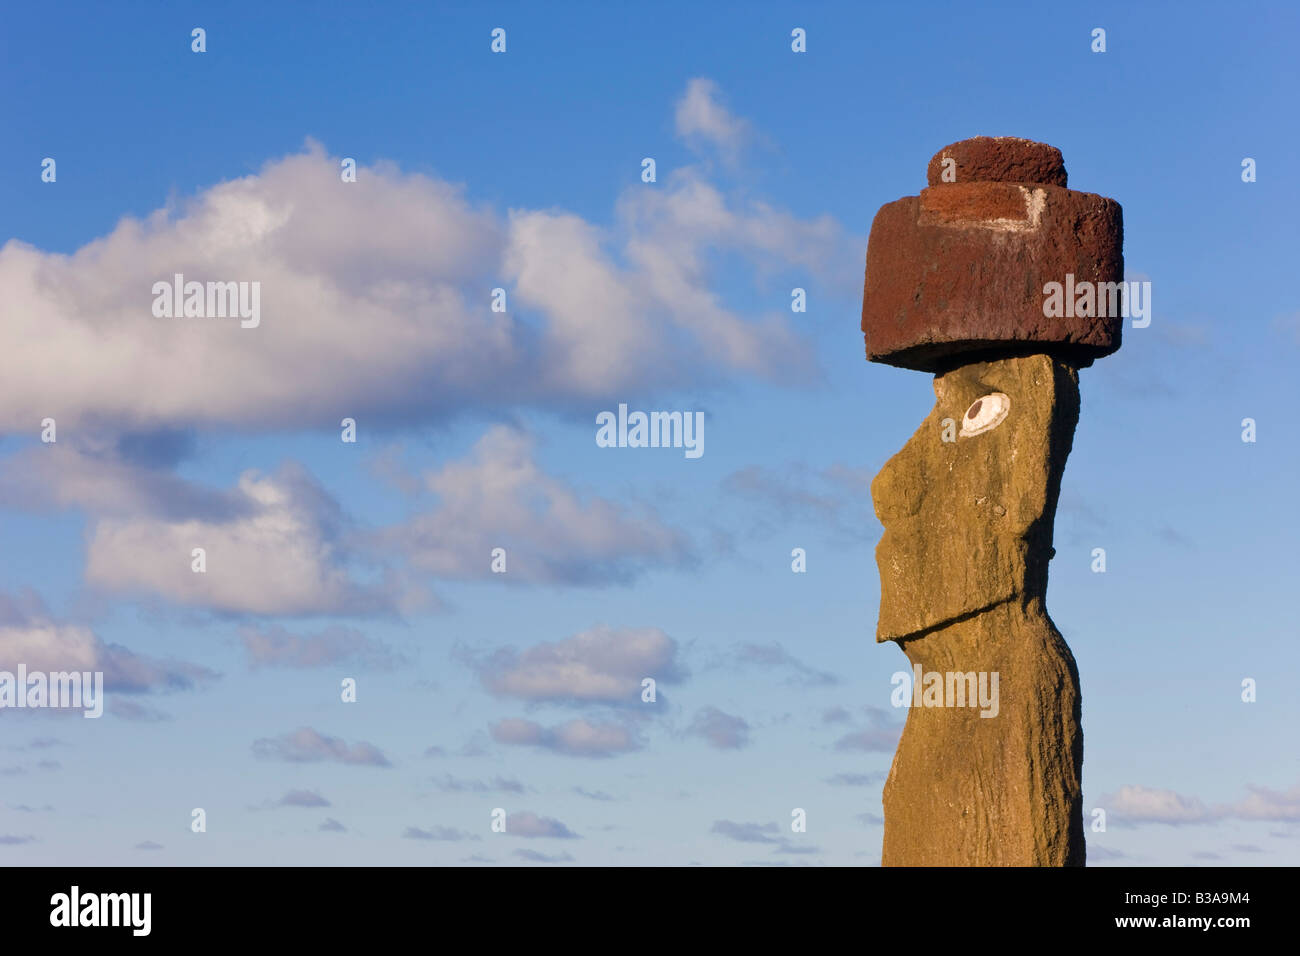 Chile, Rapa Nui, Easter Island, Moai statue Ahu Ko Te riku, the only topknotted & eyeballed Moai Stock Photo